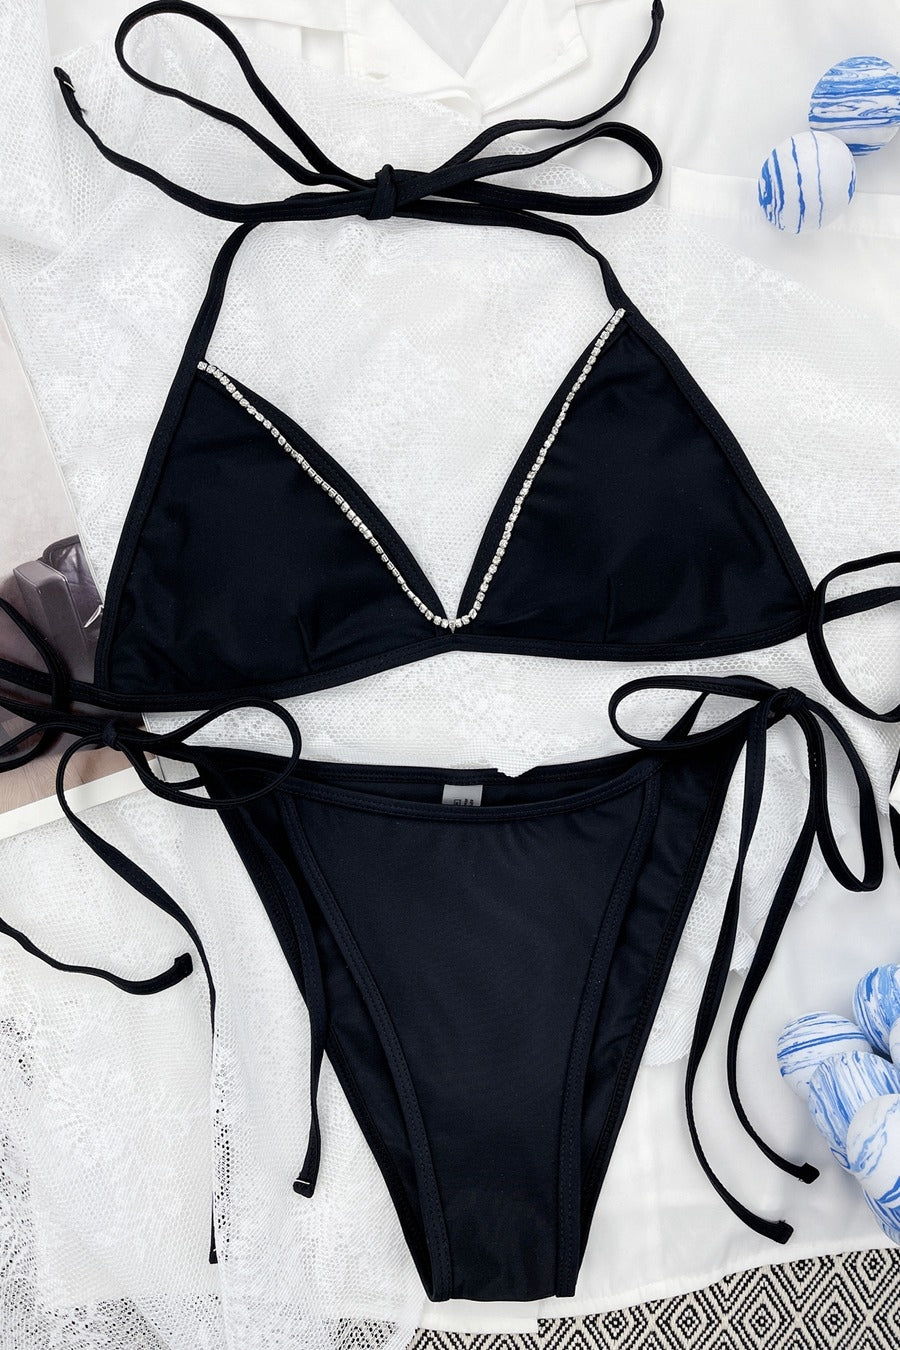 Cali Chic Women's Swimsuit Celebrity Black Rhinestone Chain Padded Triangle Bikini Set